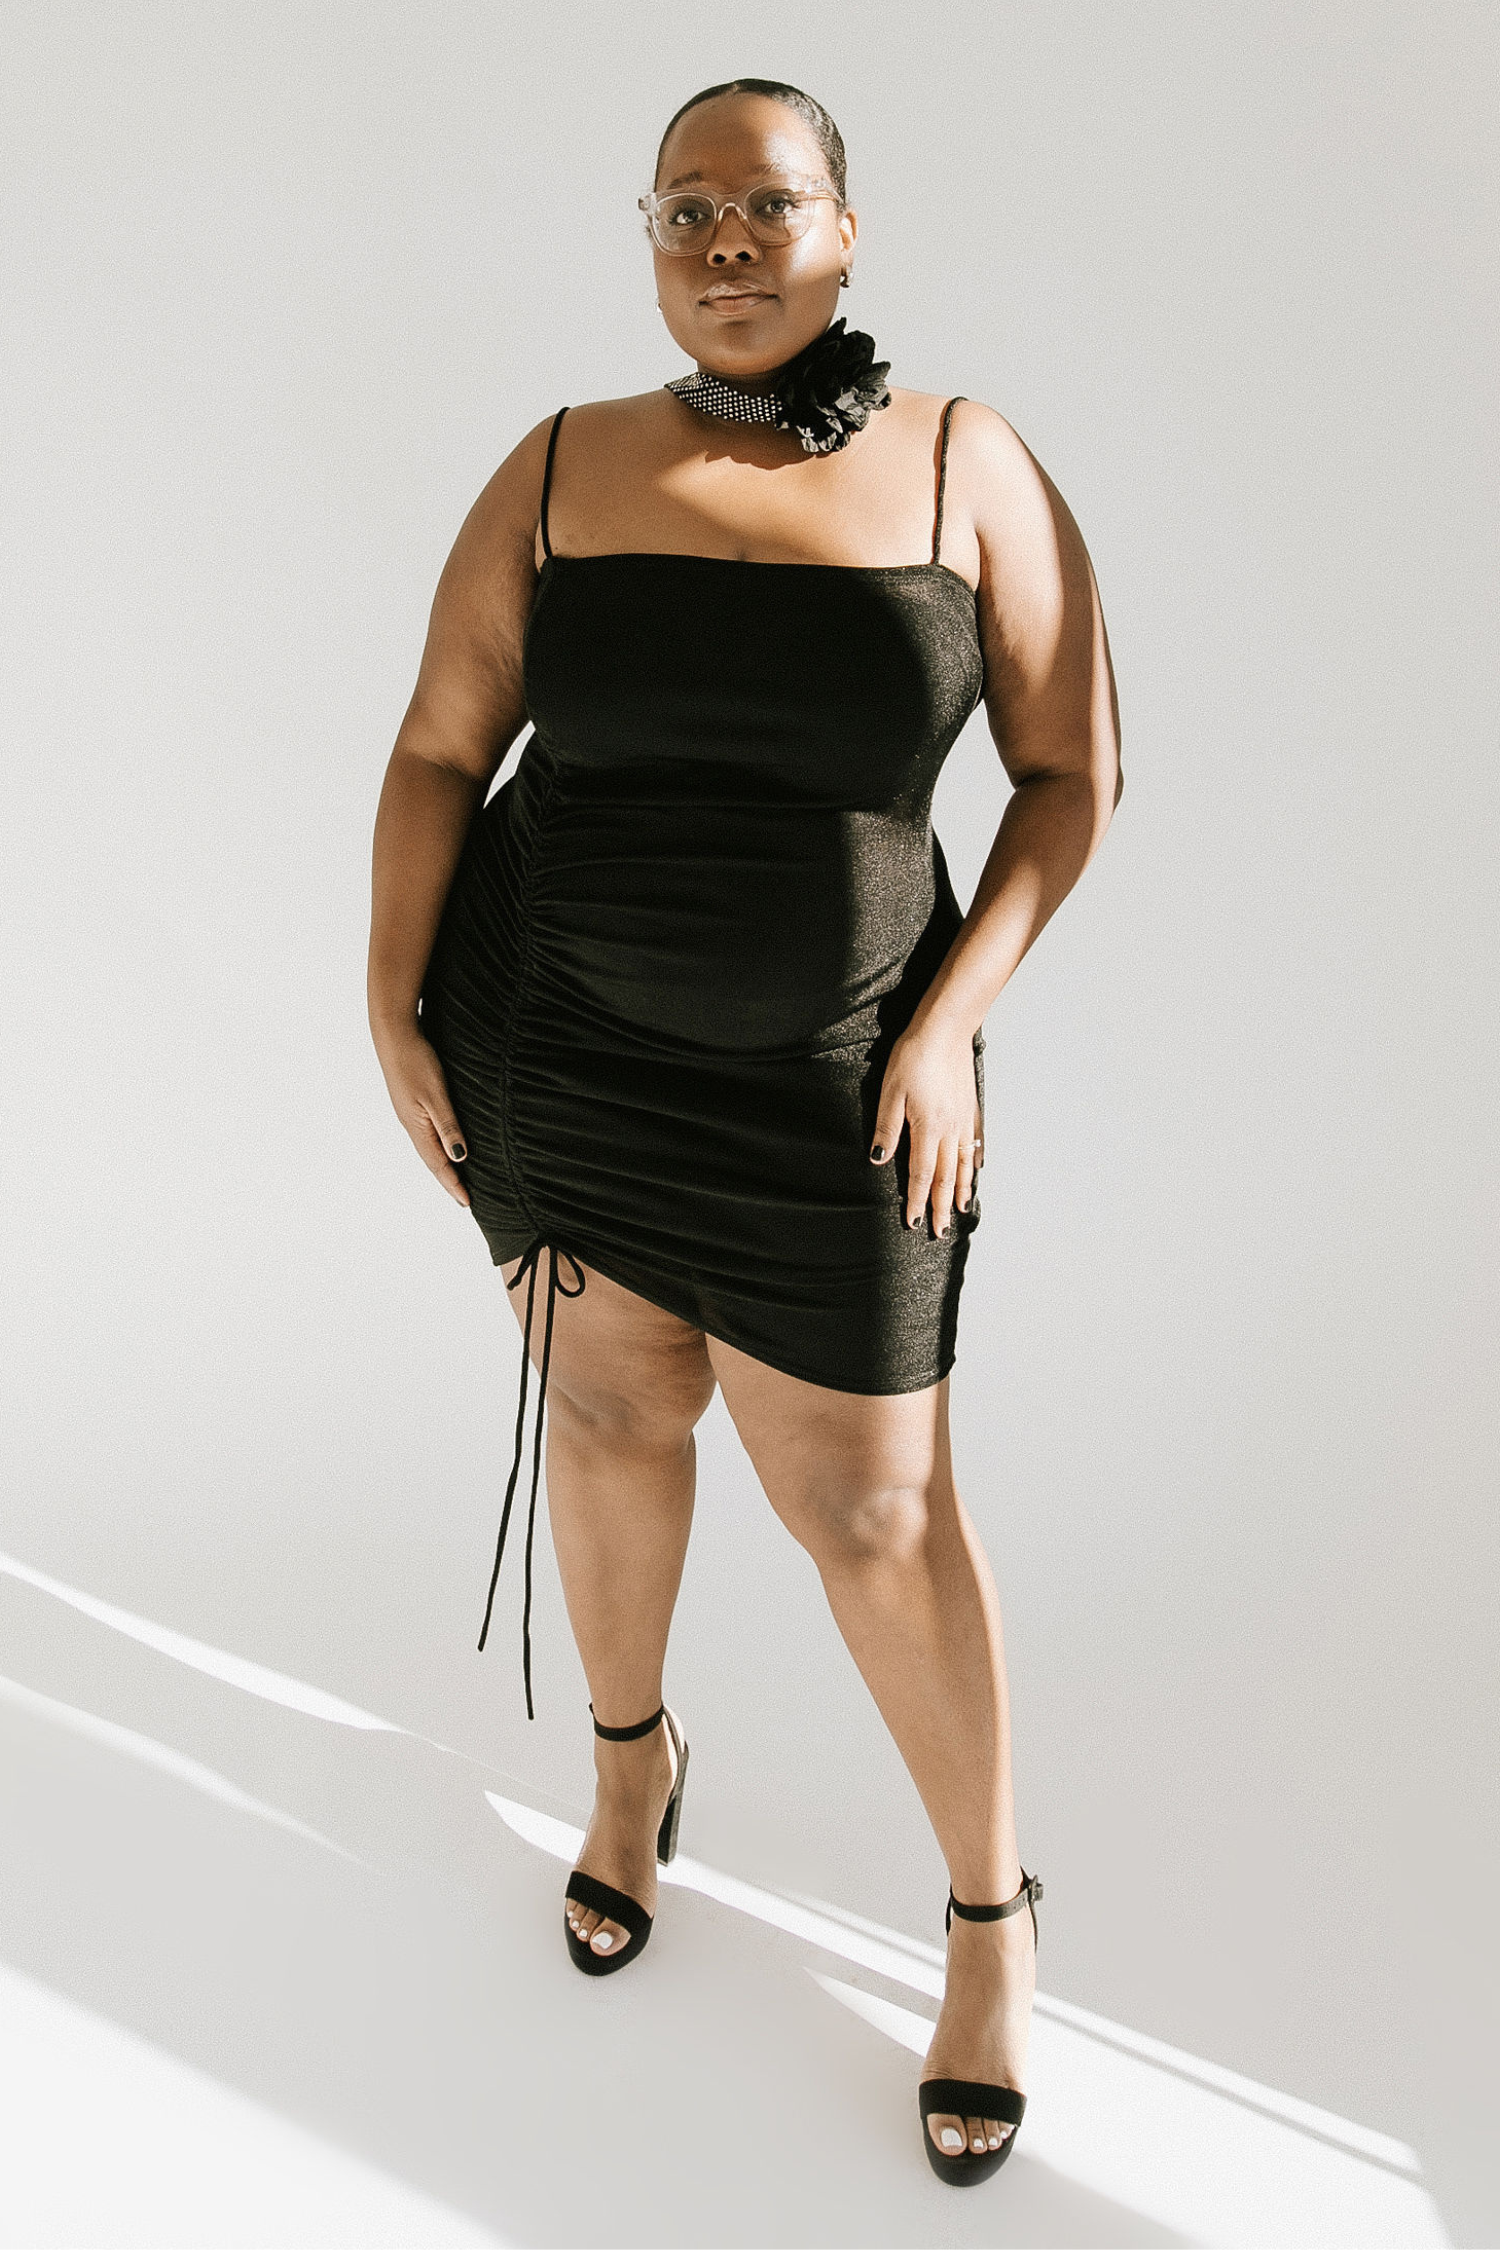 Mini - Black Shop - Aubrey THELIFESTYLEDCO More Dress Sizes - Ruched